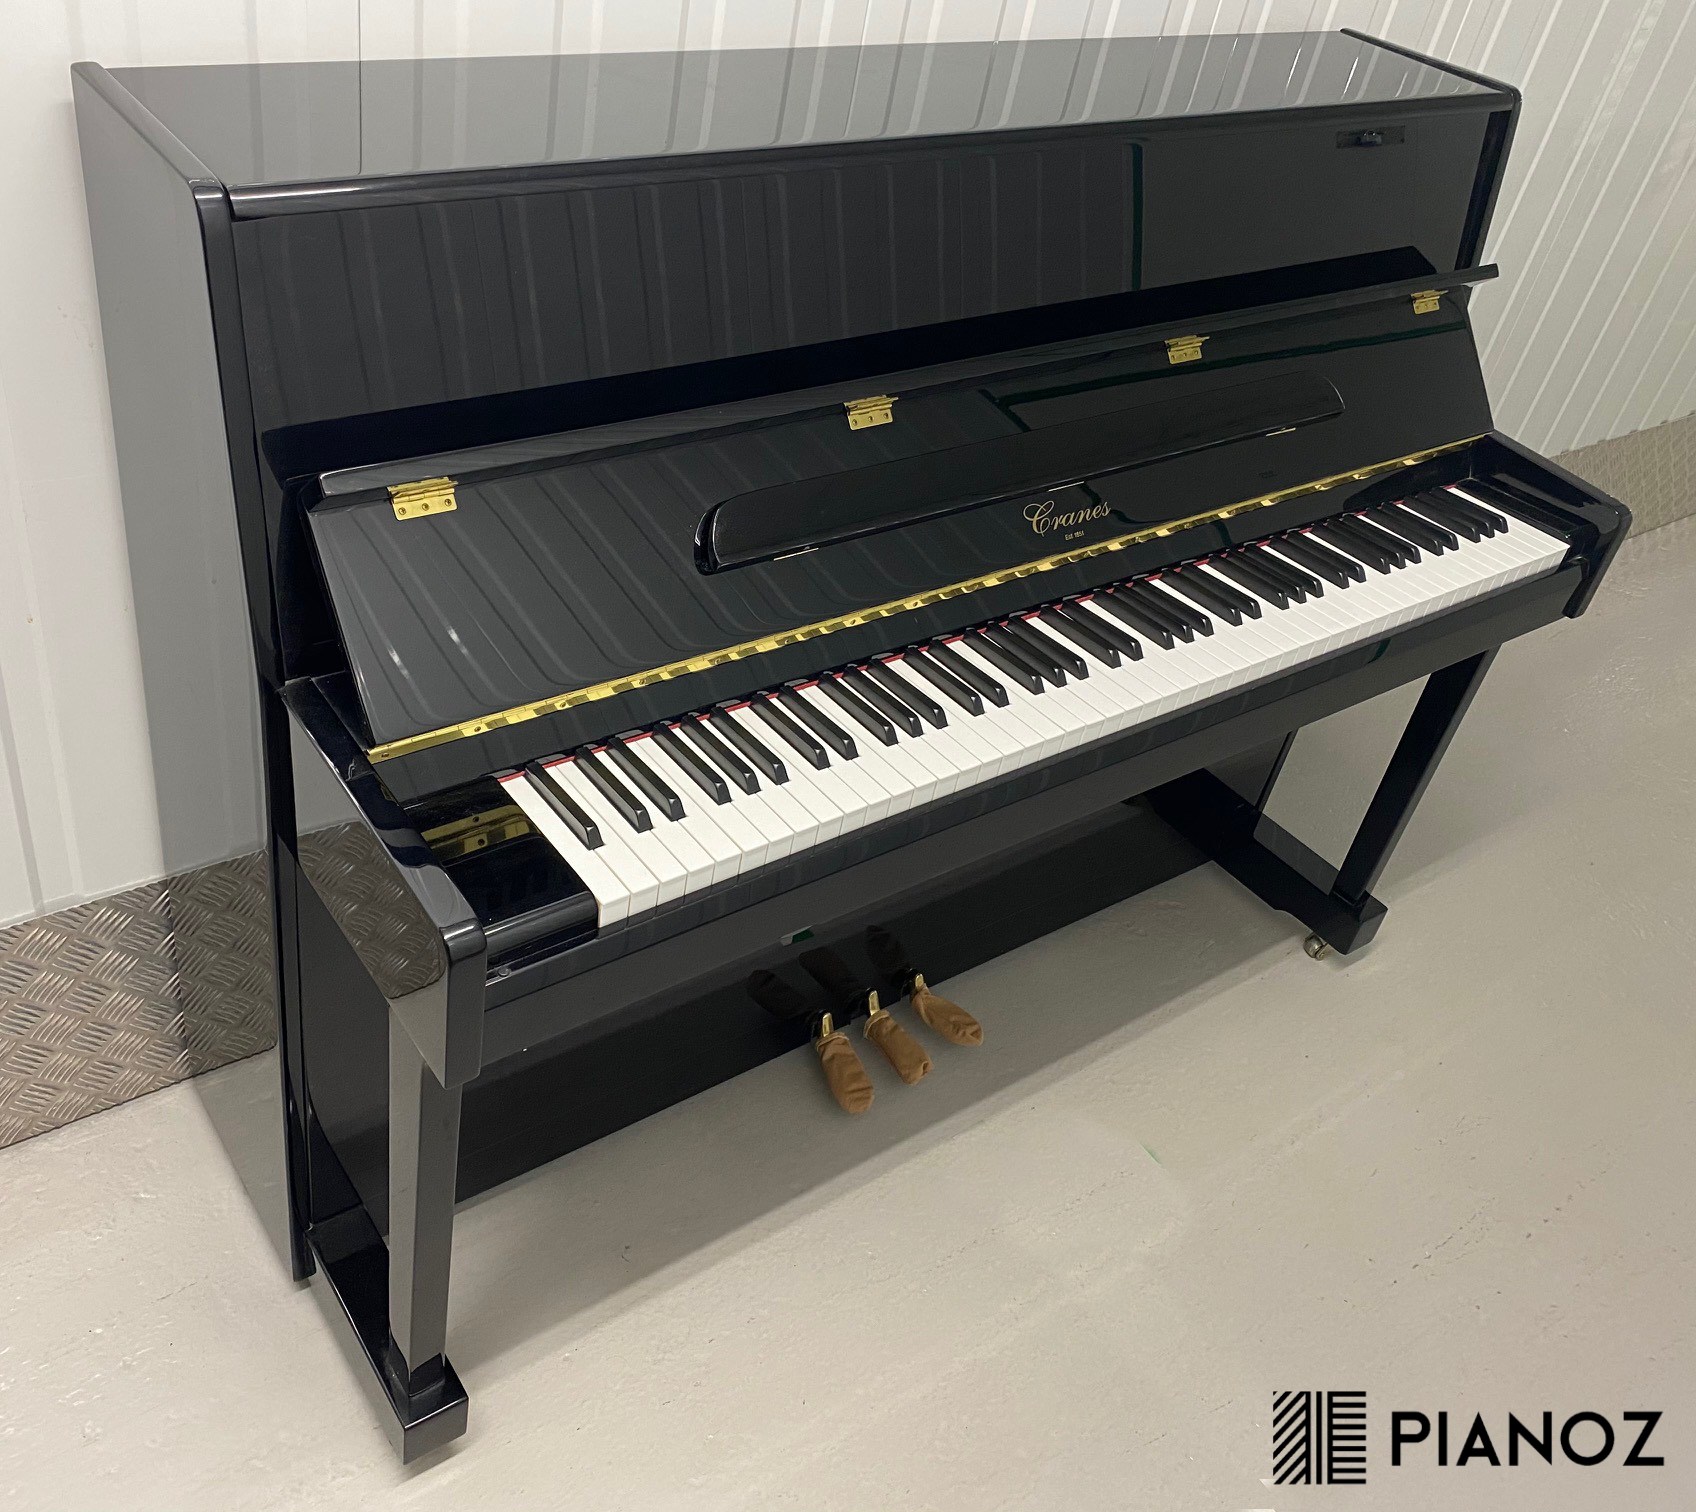 Cranes 110 Black Gloss Upright Piano piano for sale in UK